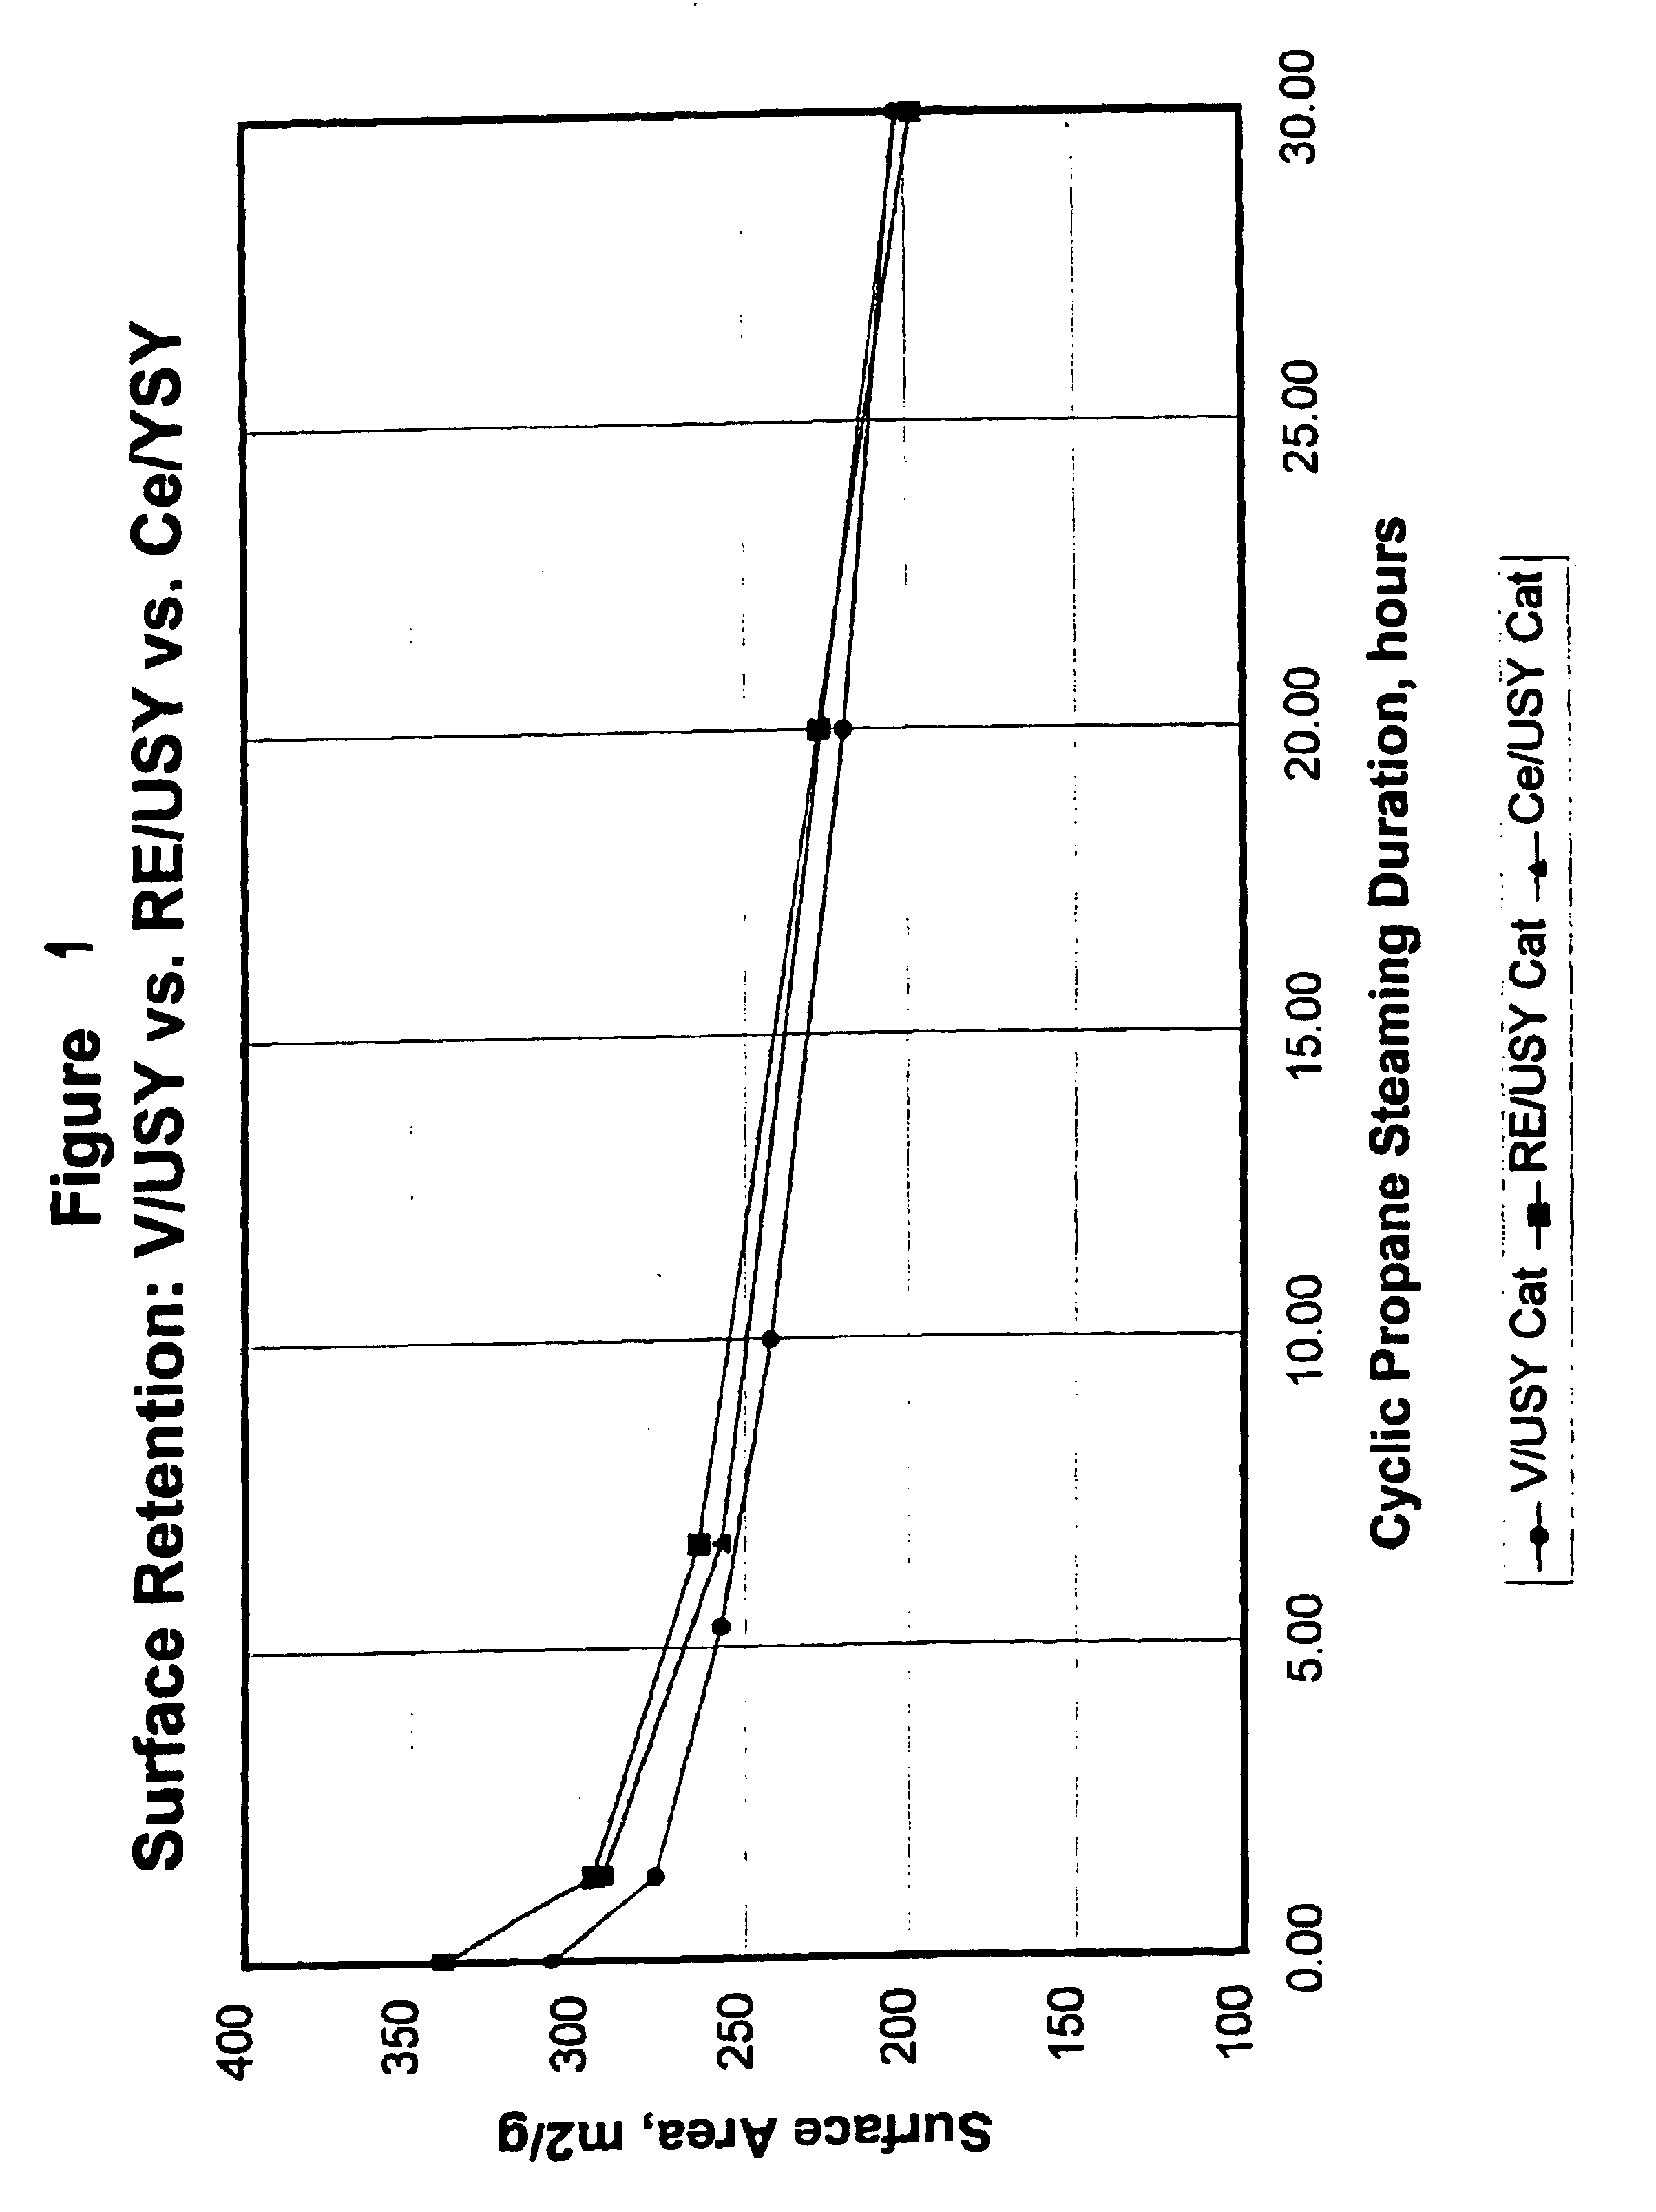 Gasoline sulfur reduction in fluid catalytic cracking